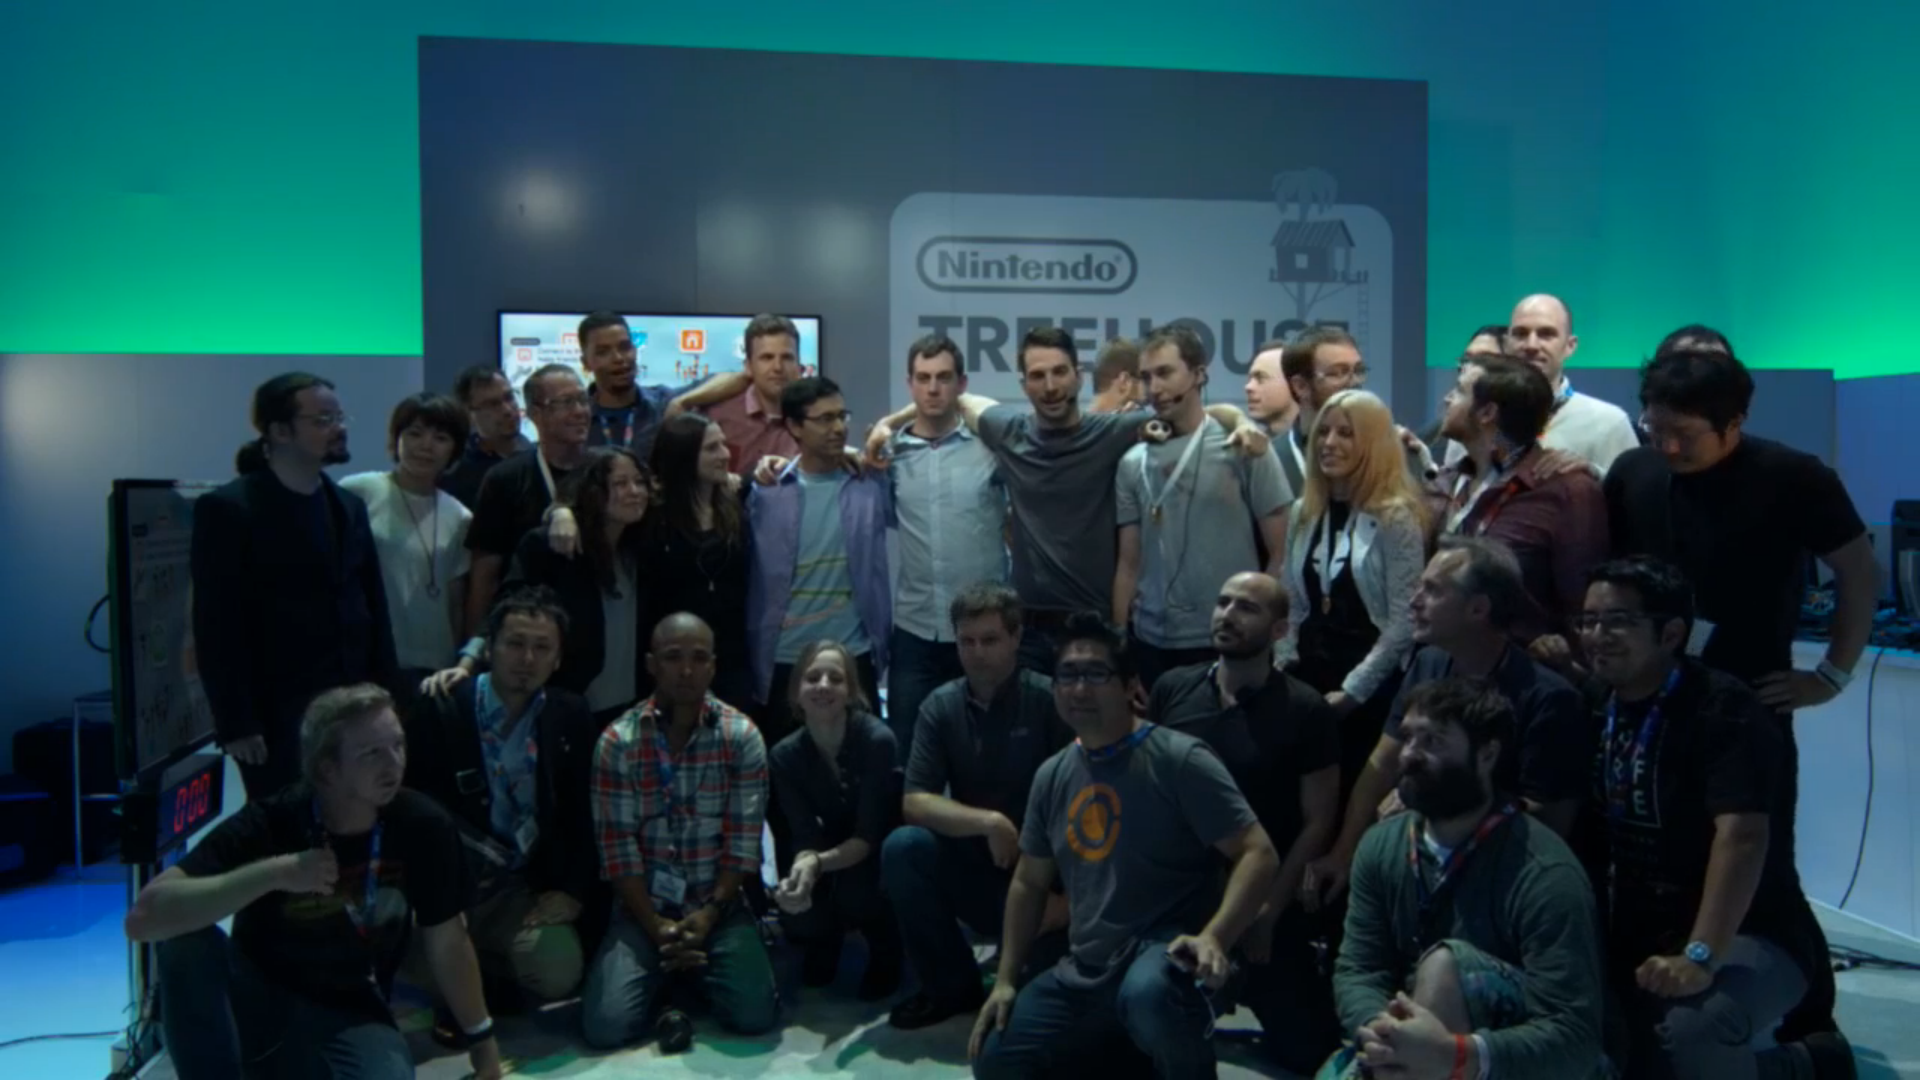 E3 2014 Video Blow Out: Nintendo At E3 2014 – That’s a Wrap!